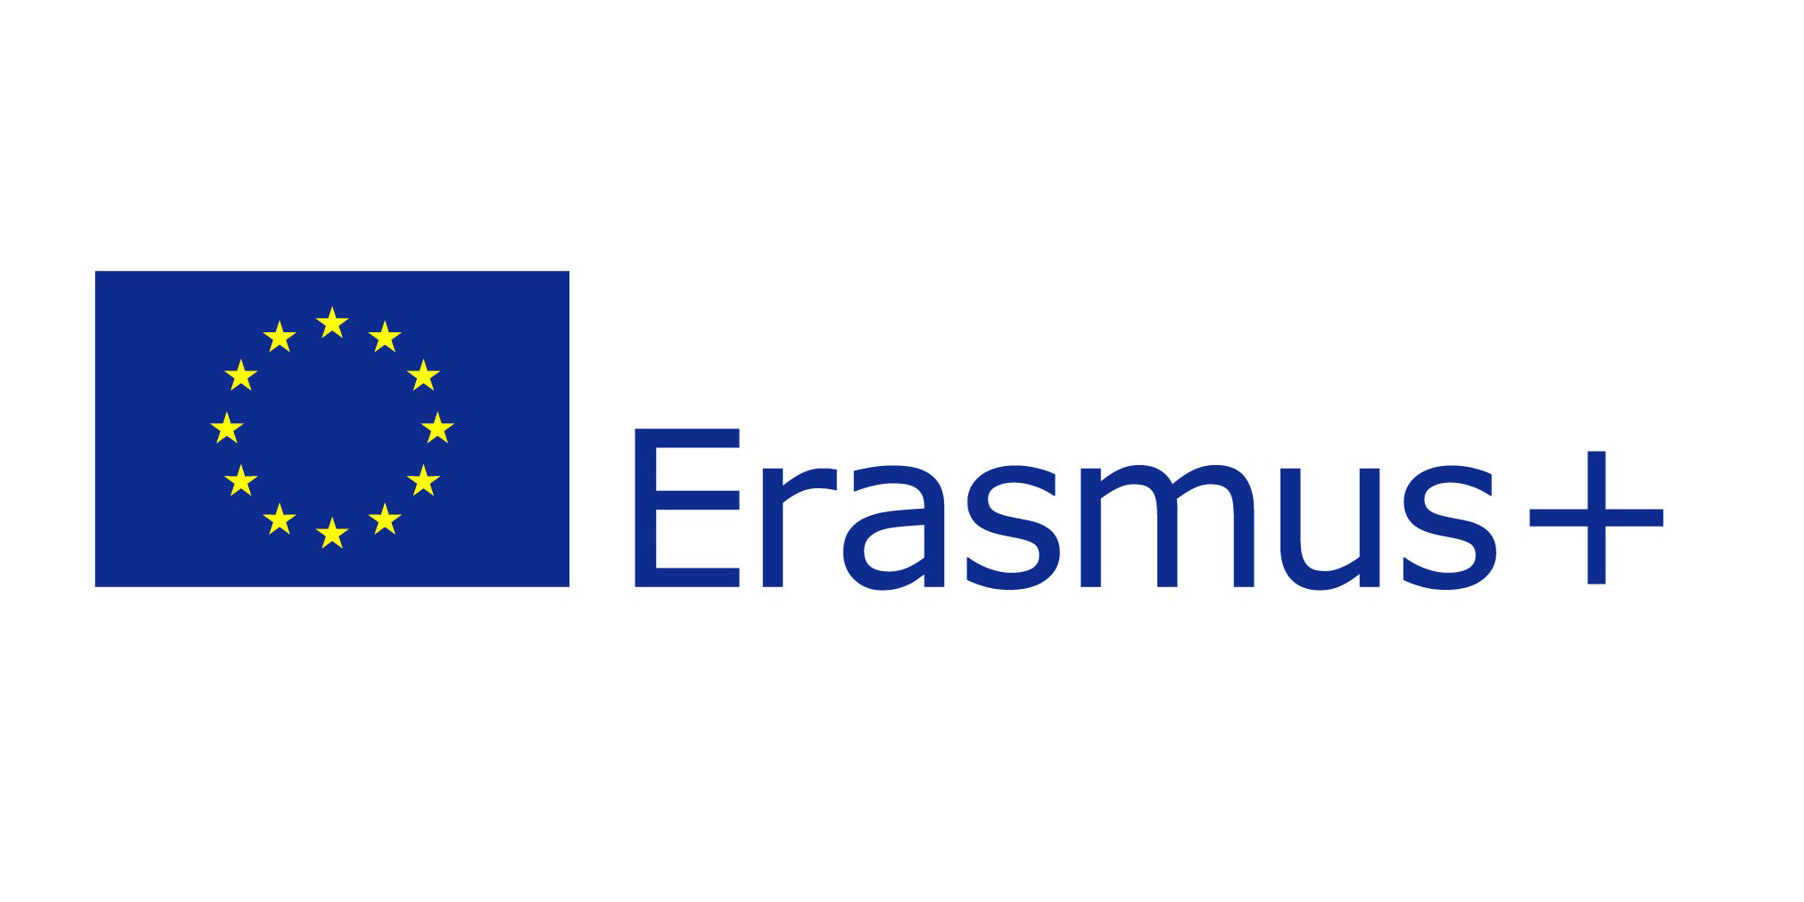 Towards page "ERASMUS